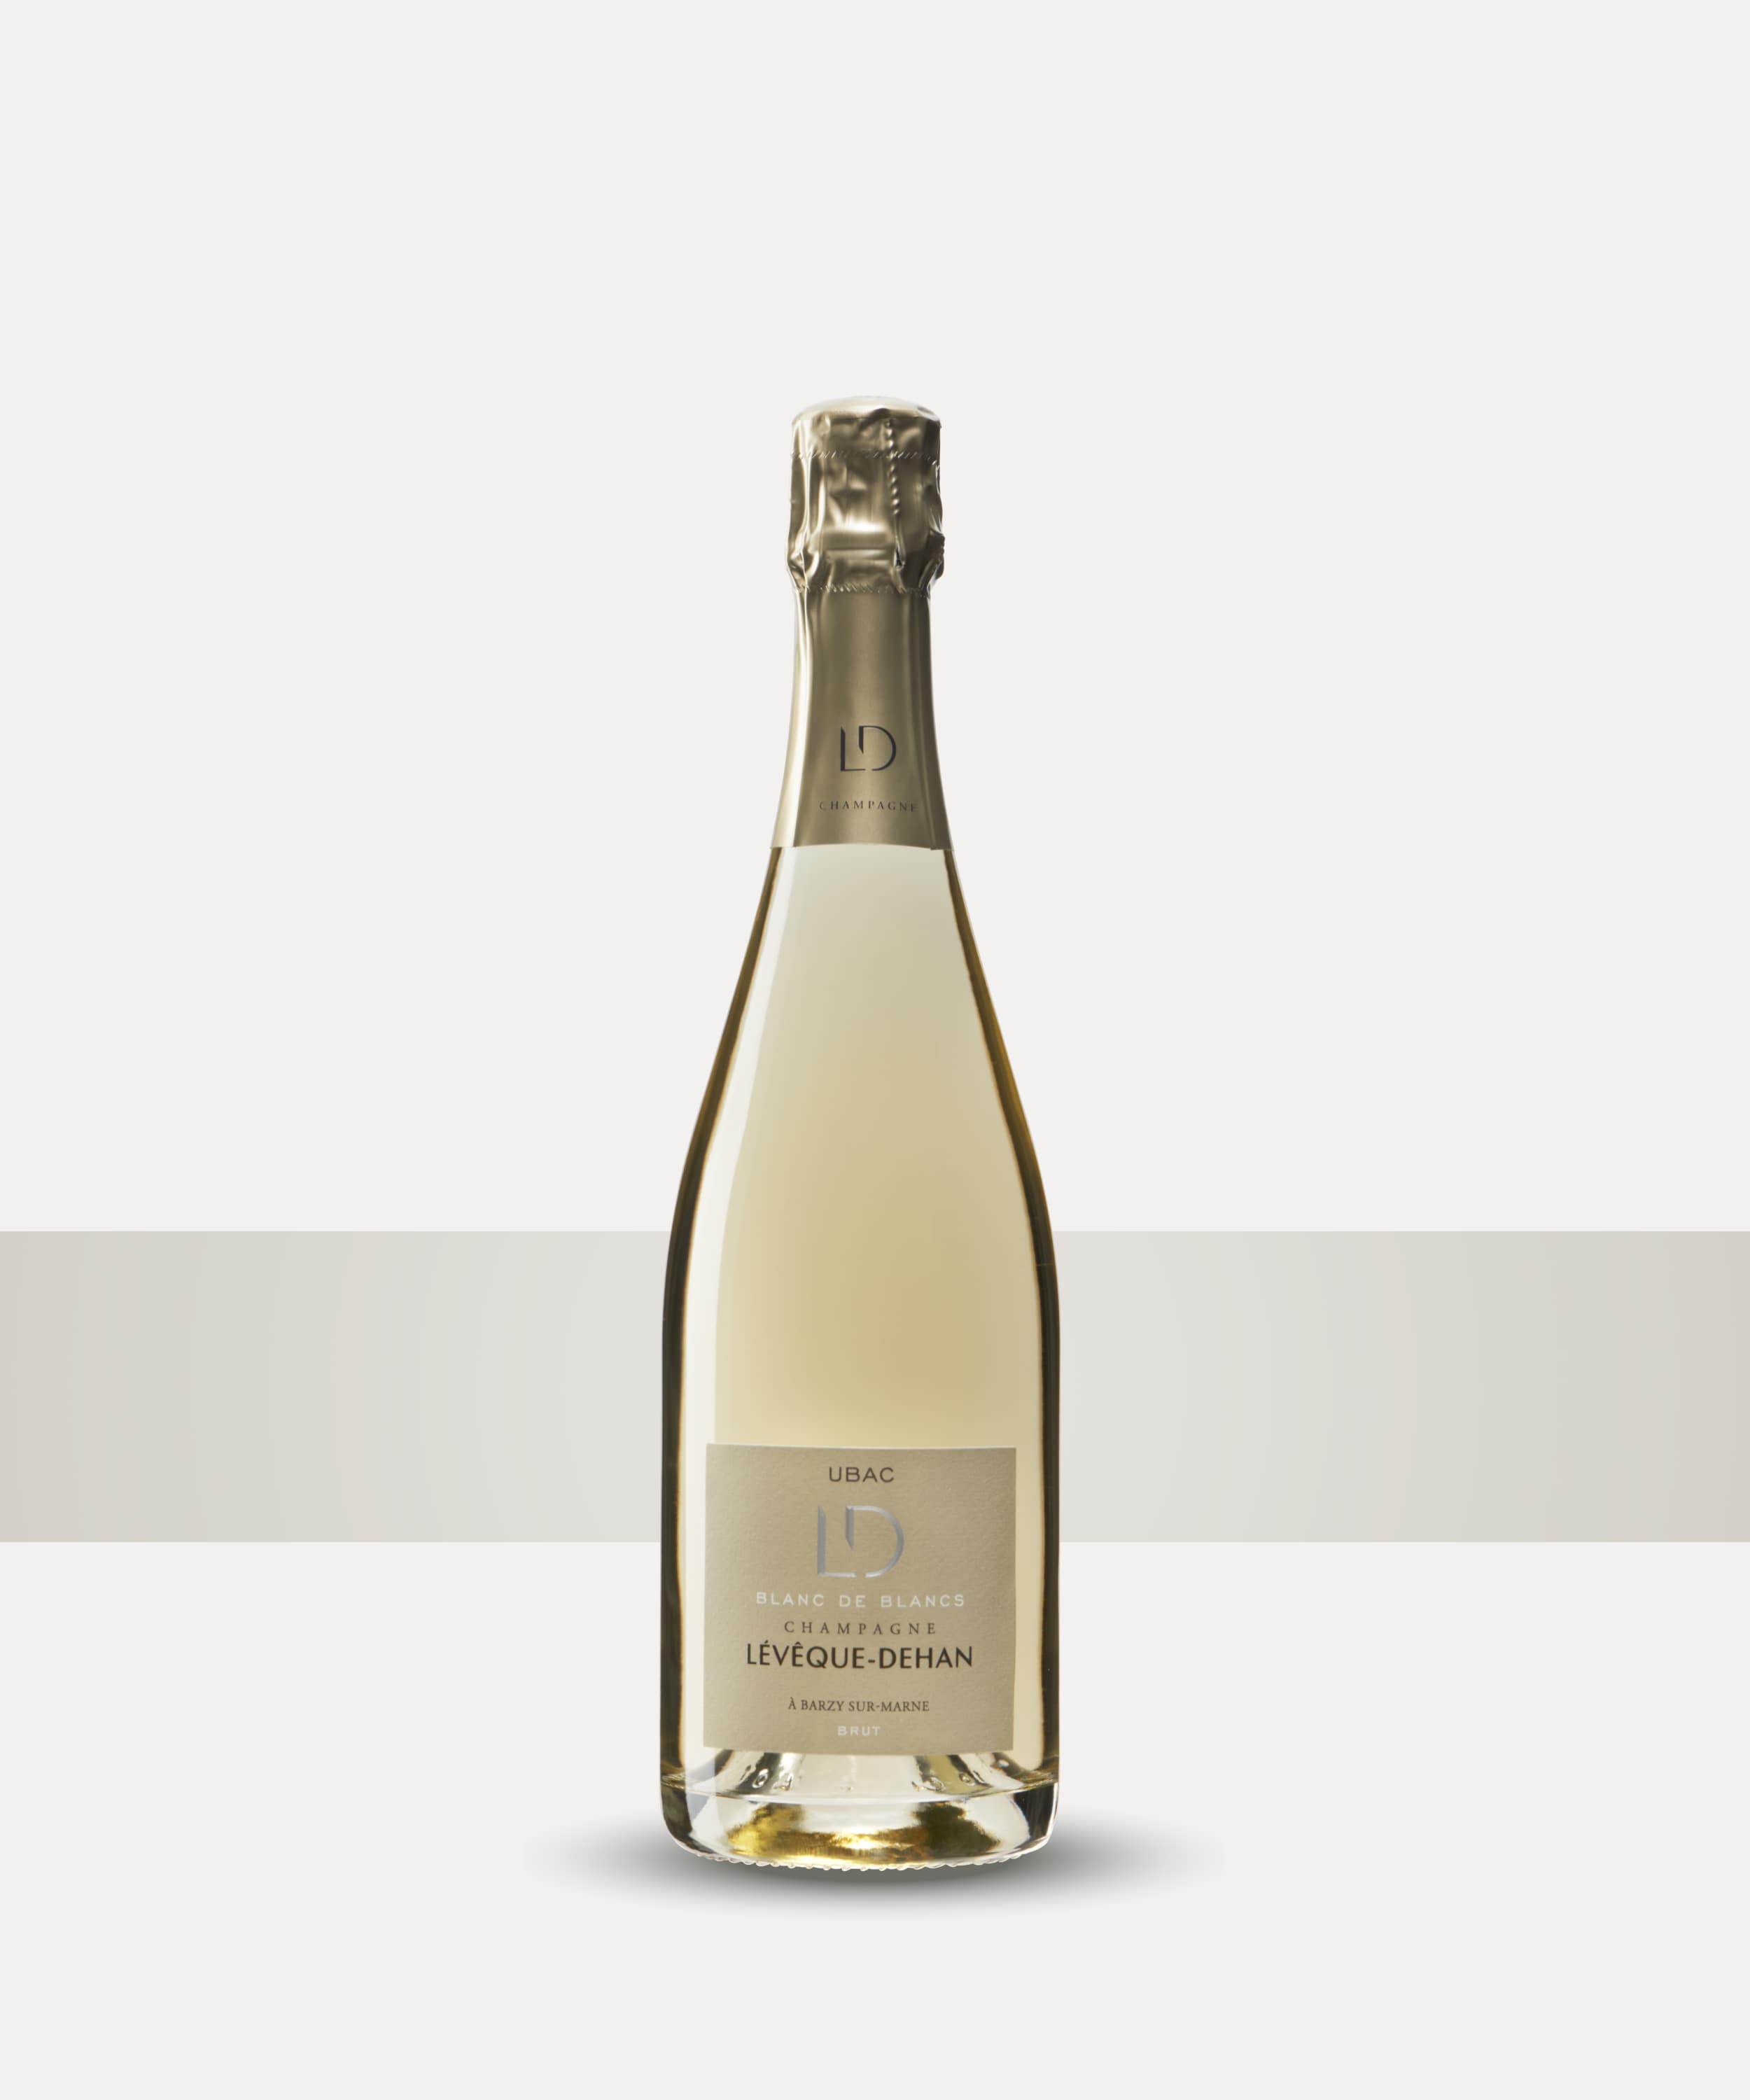 Champagne Brut - Achat / Vente